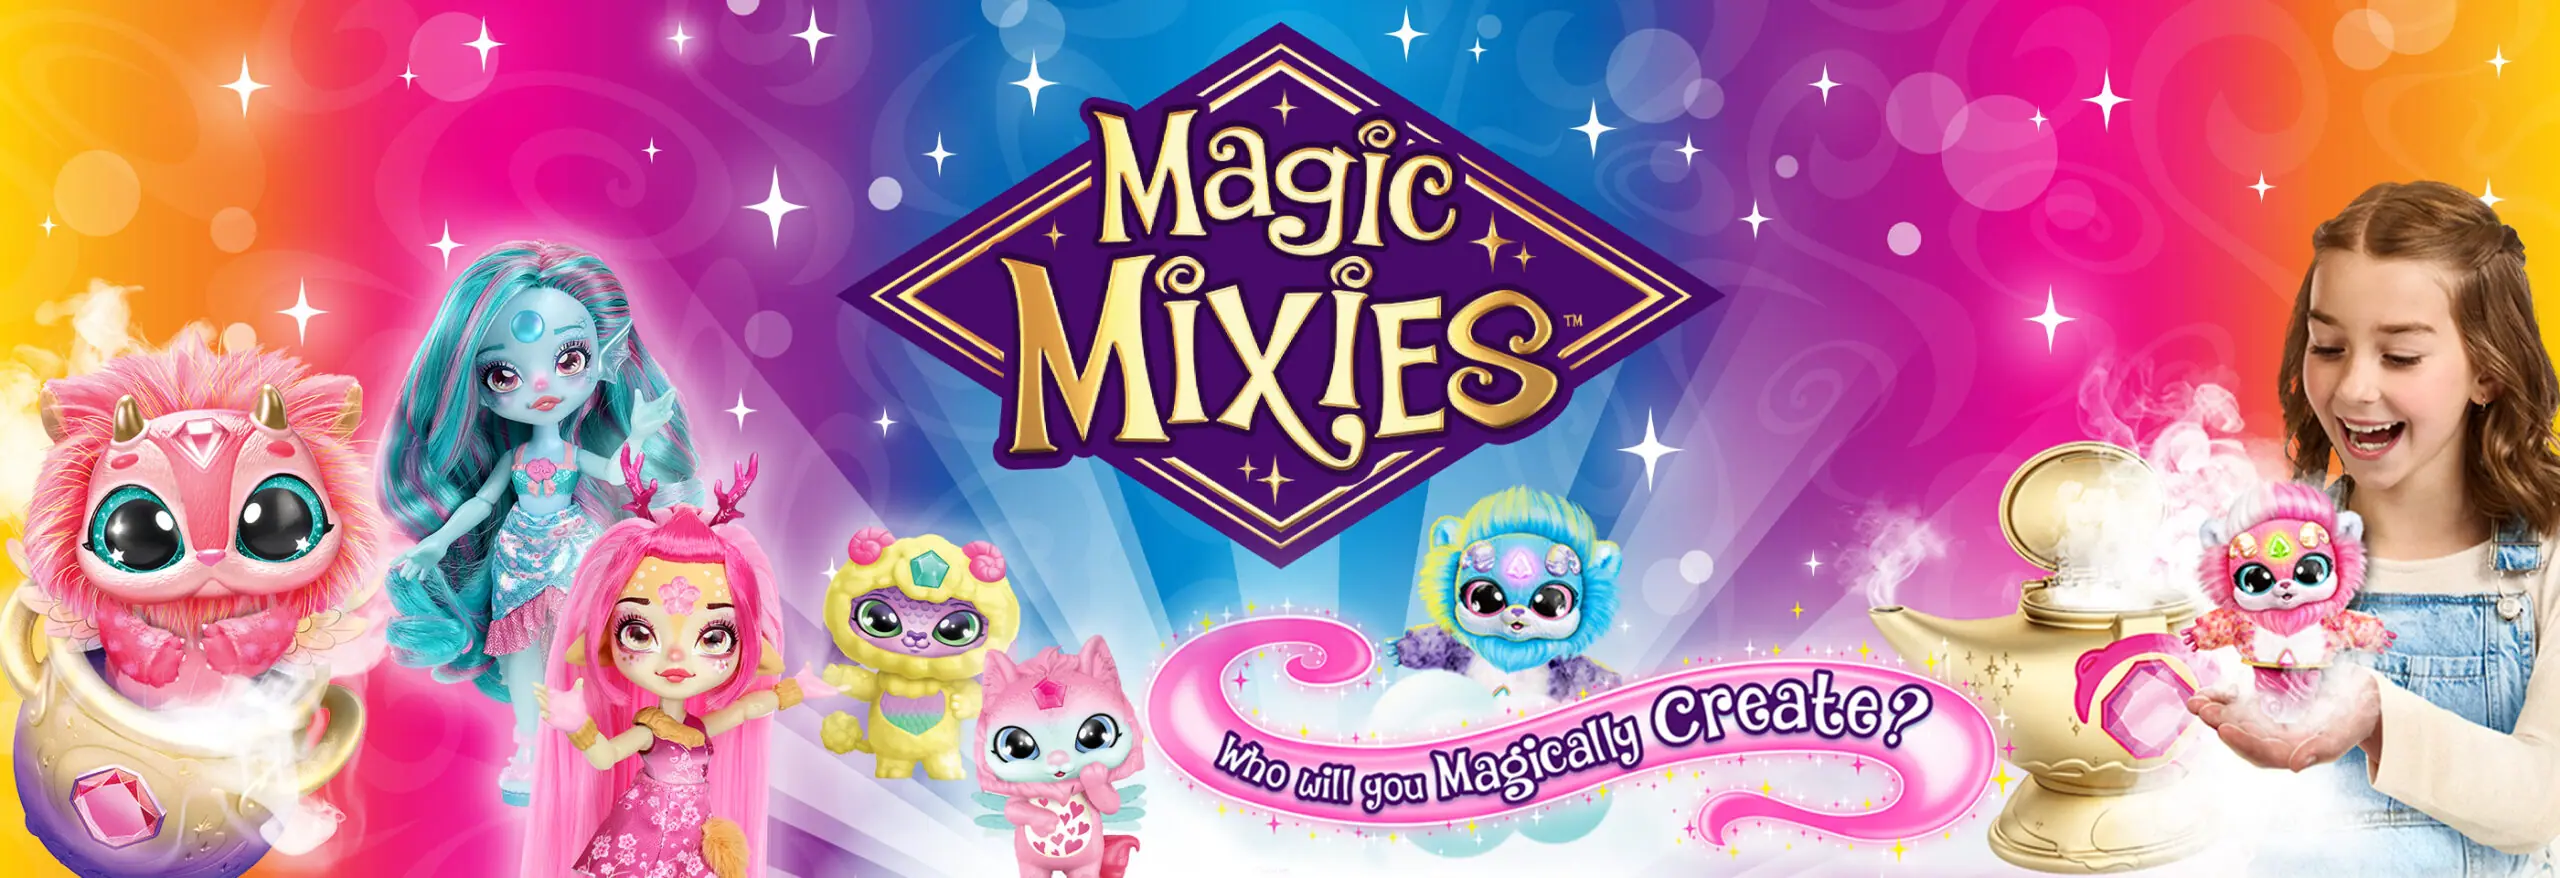  Magic Mixies Pixlings. Unia The Unicorn Pixling